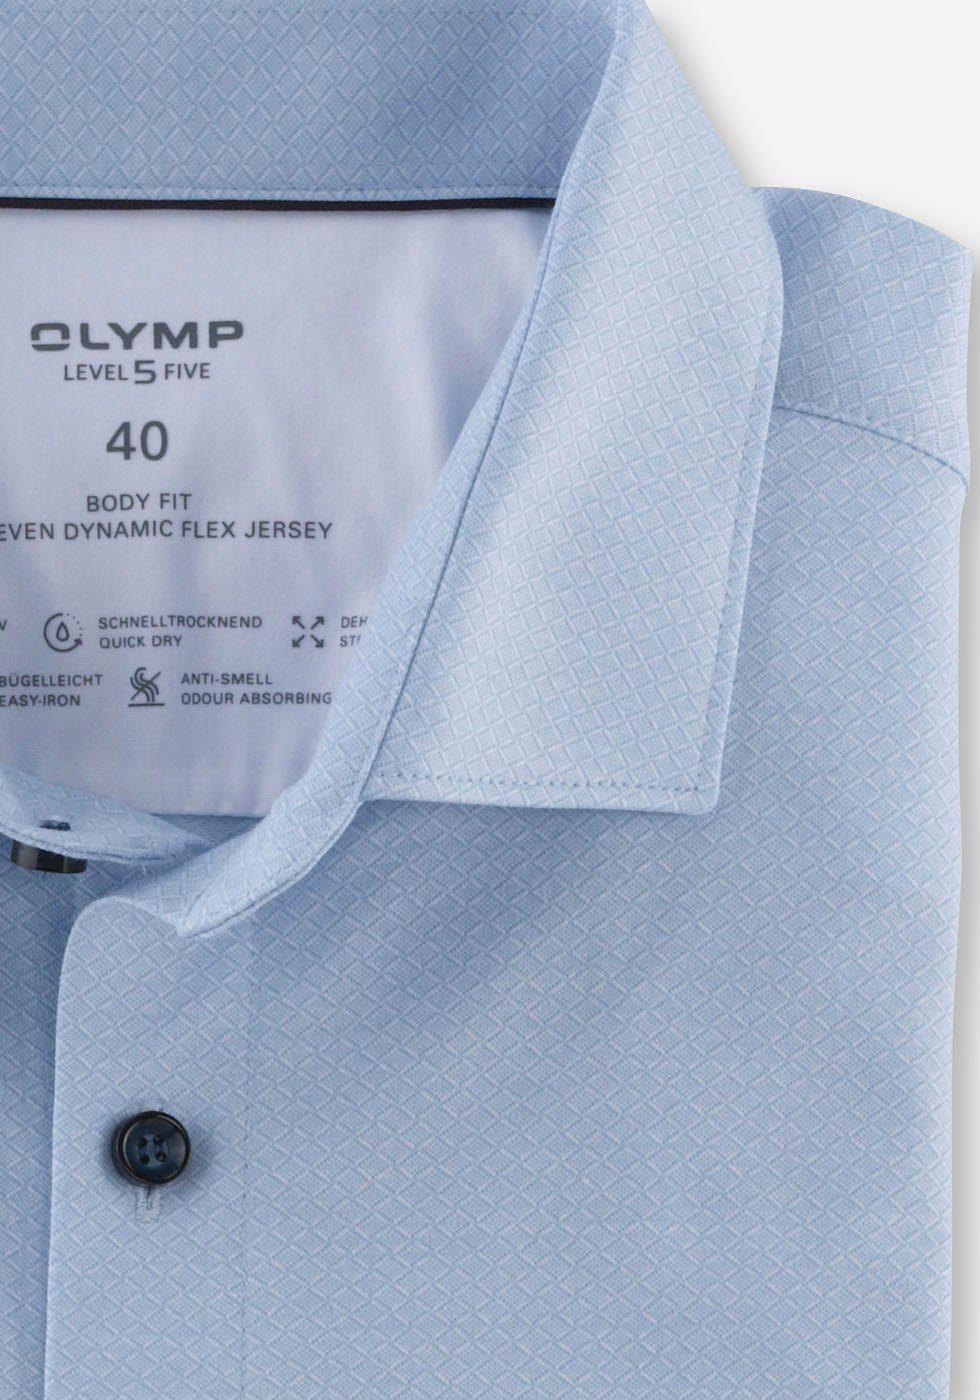 aus Level 5-Serie OLYMP bleu 24/7 body Level fit der Five Businesshemd